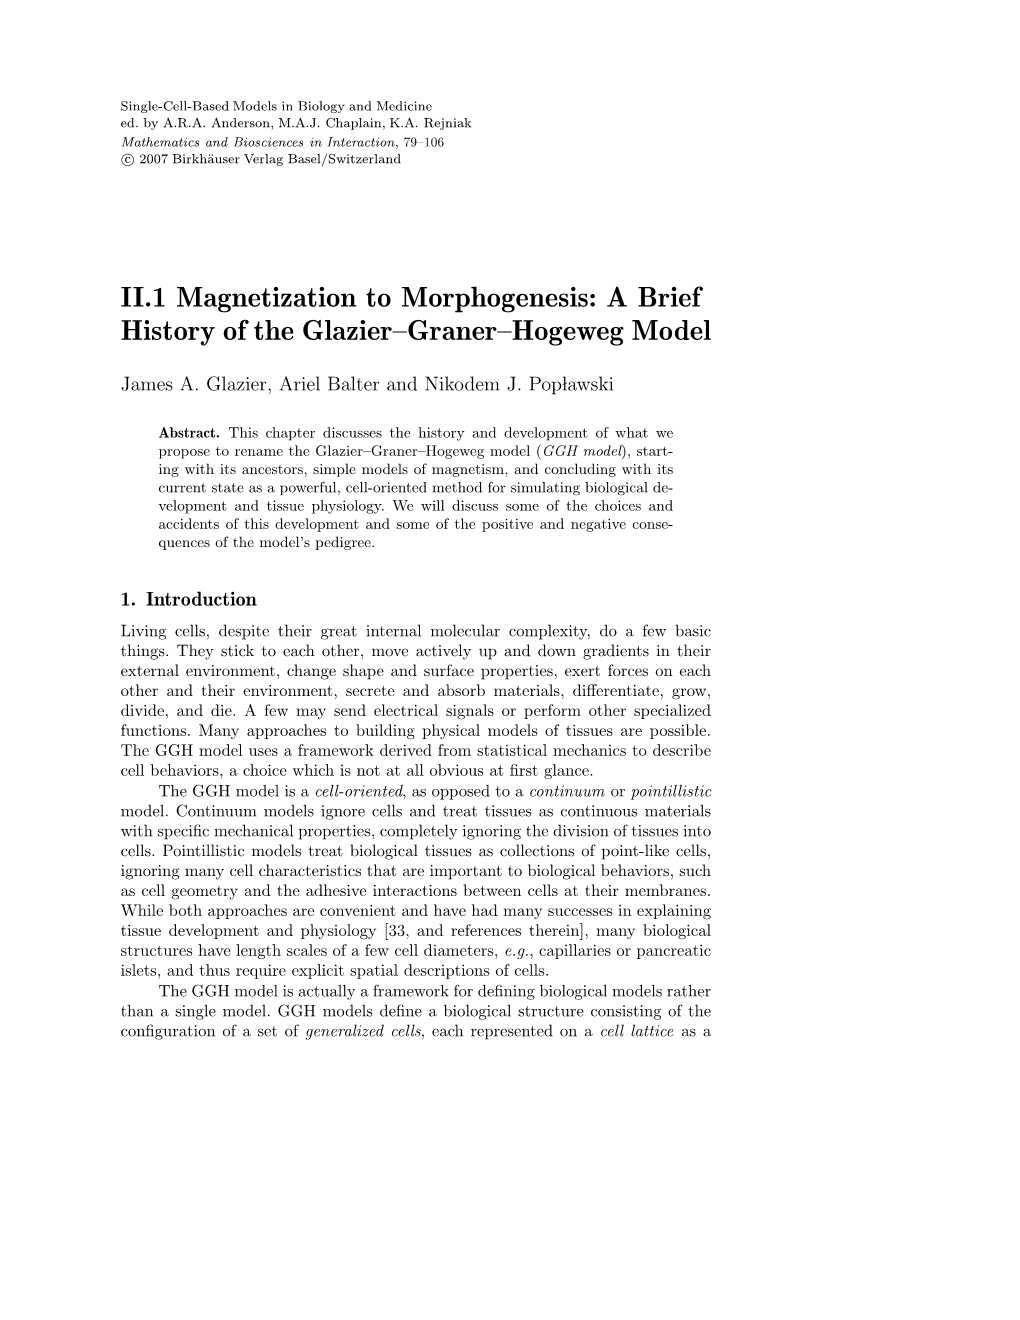 A Brief History of the Glazier–Graner–Hogeweg Model